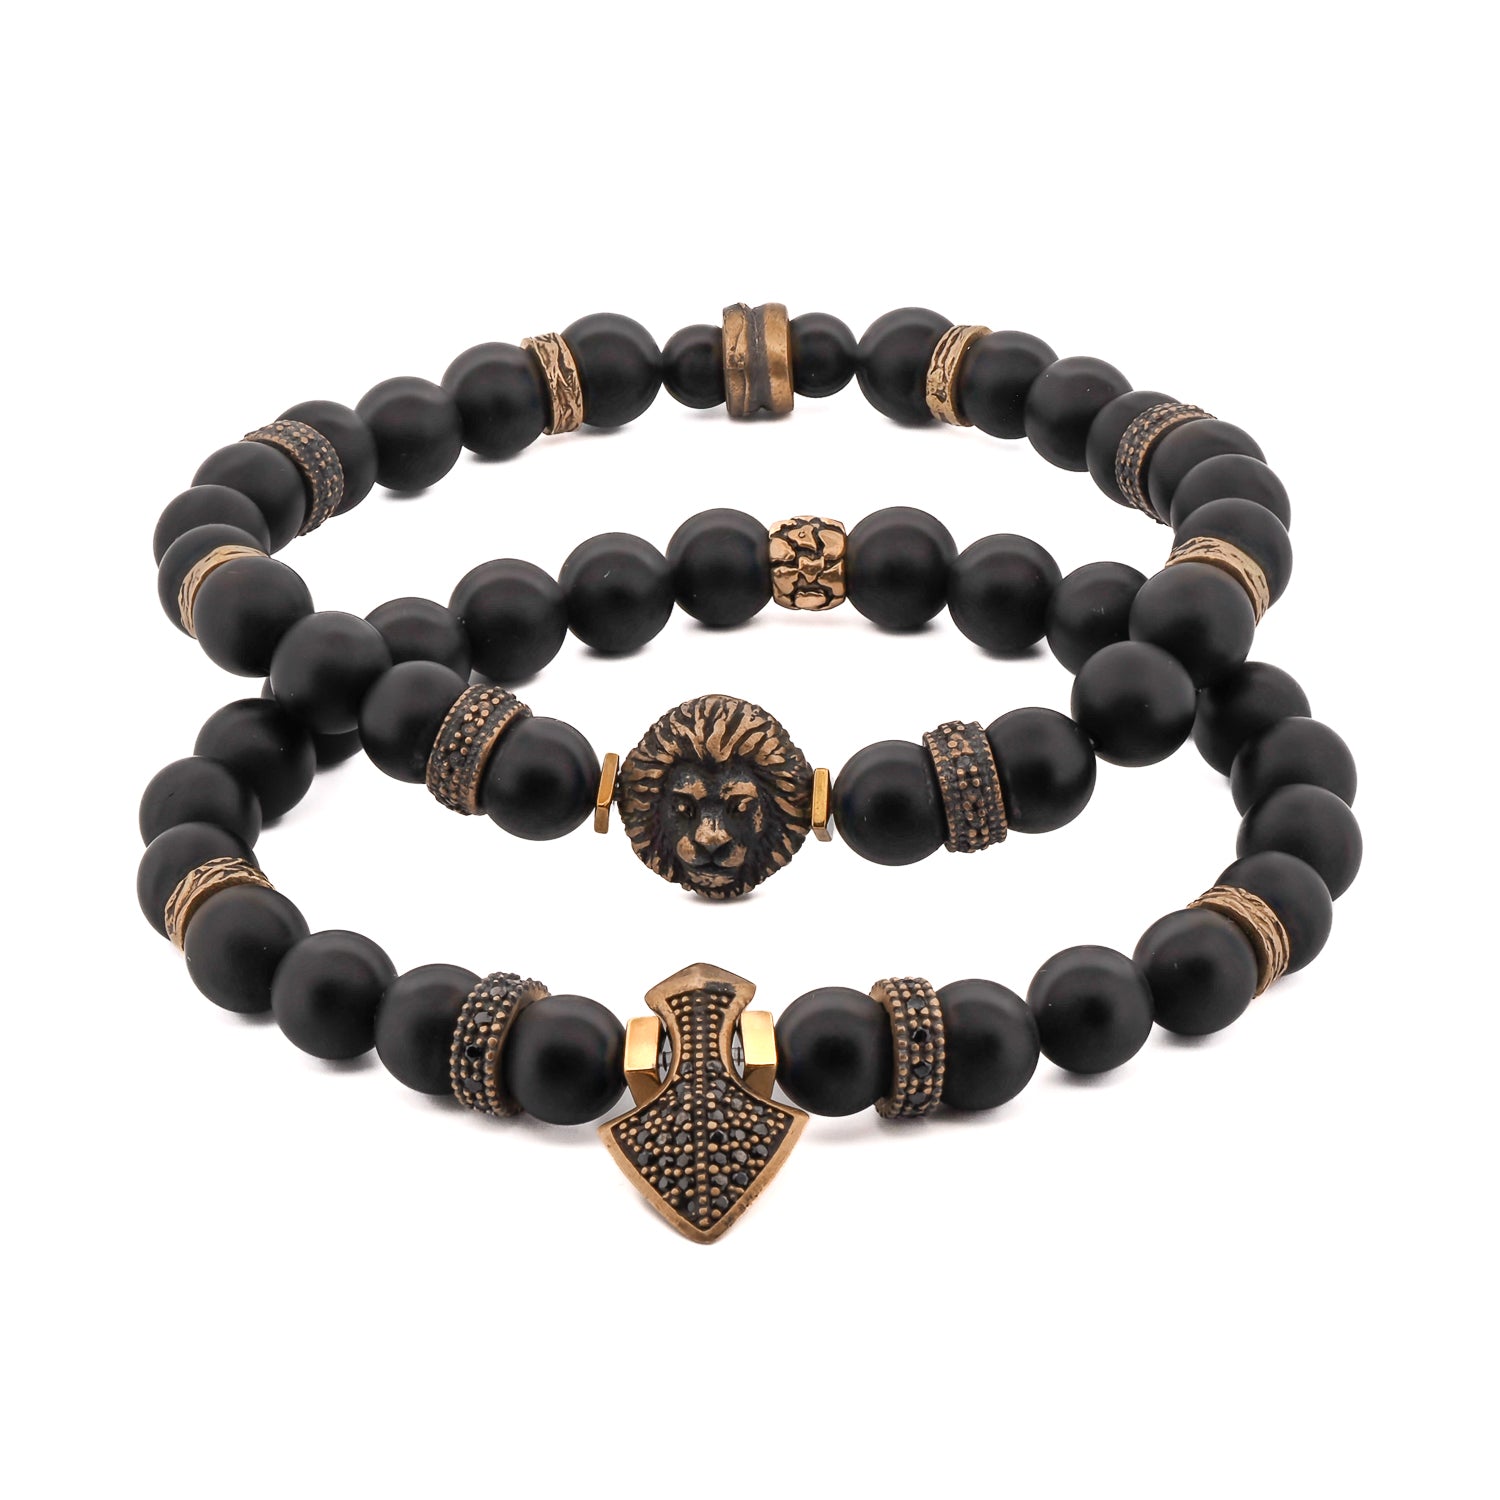 Powerful Lion & Diamond Arrow Black Onyx Bracelet Set featuring 8mm black onyx stone beads, bronze spacers, and bronze lion and diamond arrow charms